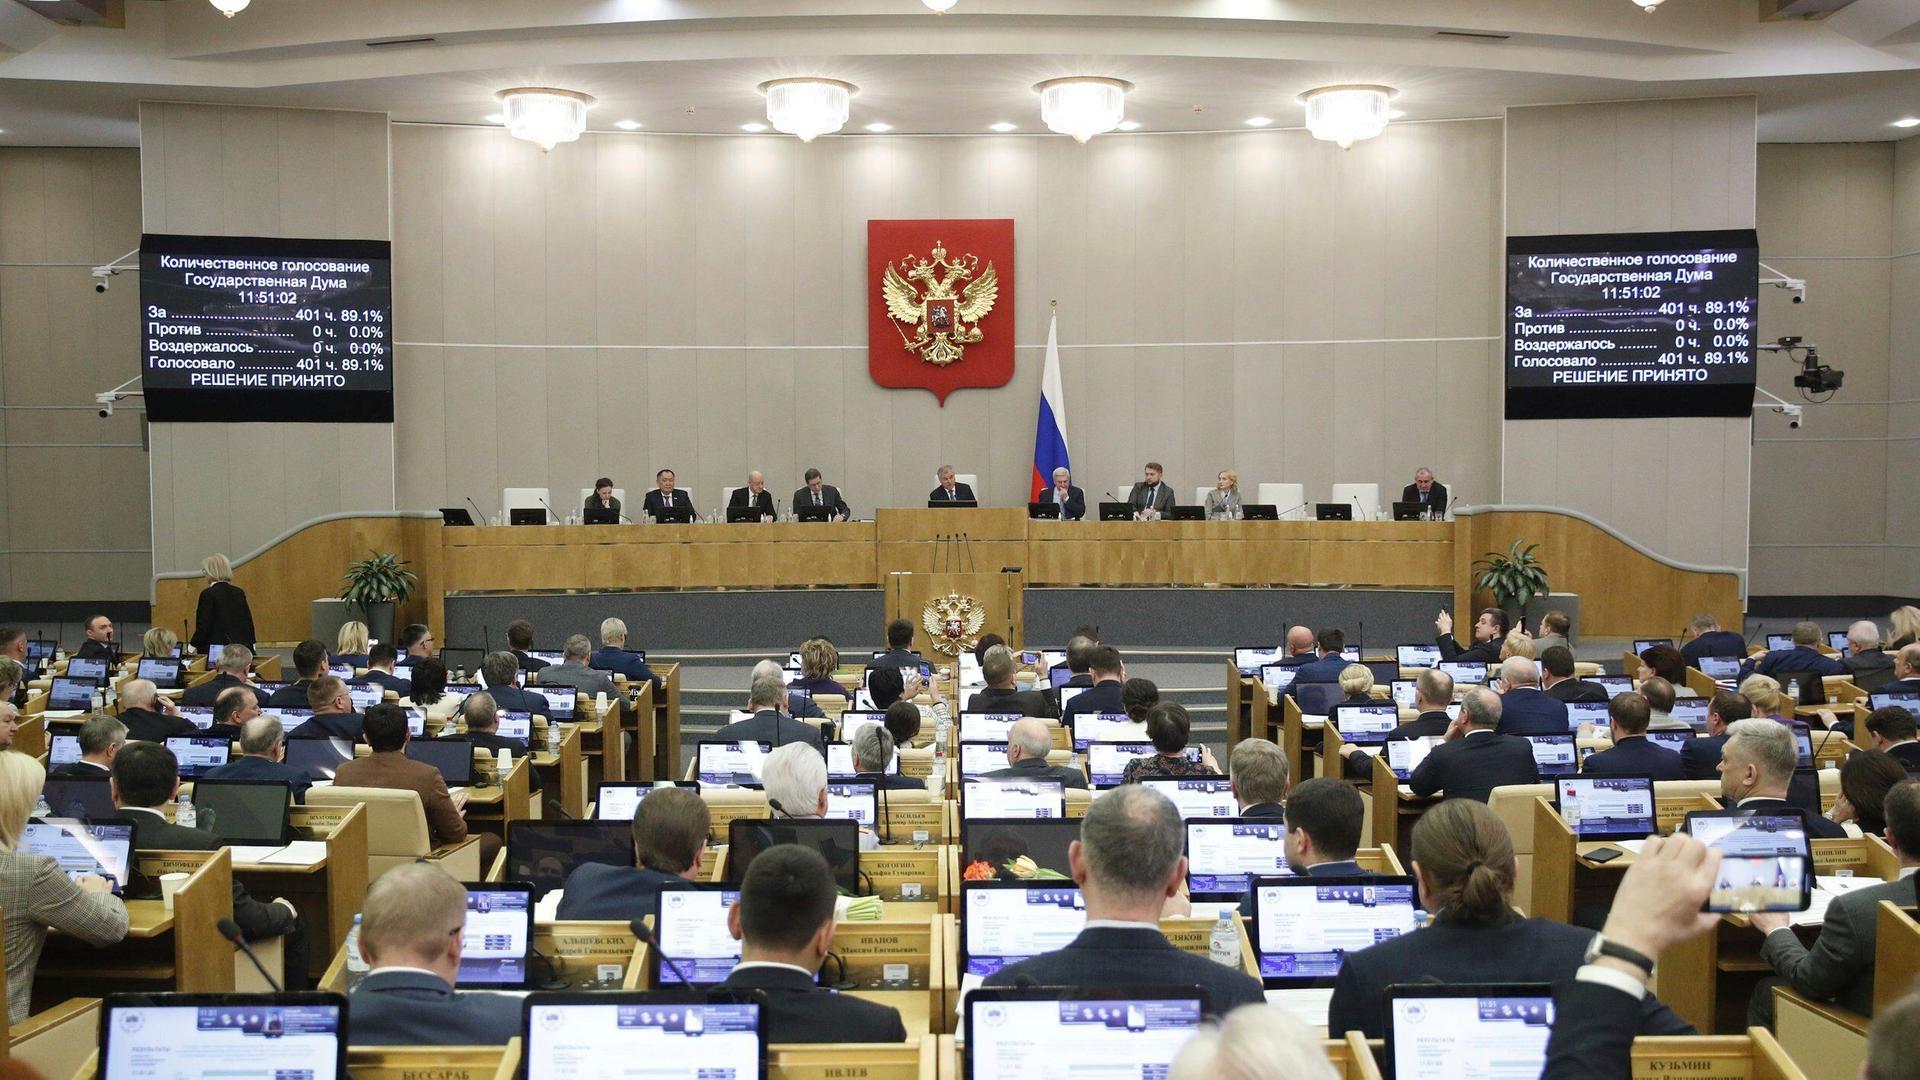 Duma, das russische Parlament, Innenansicht